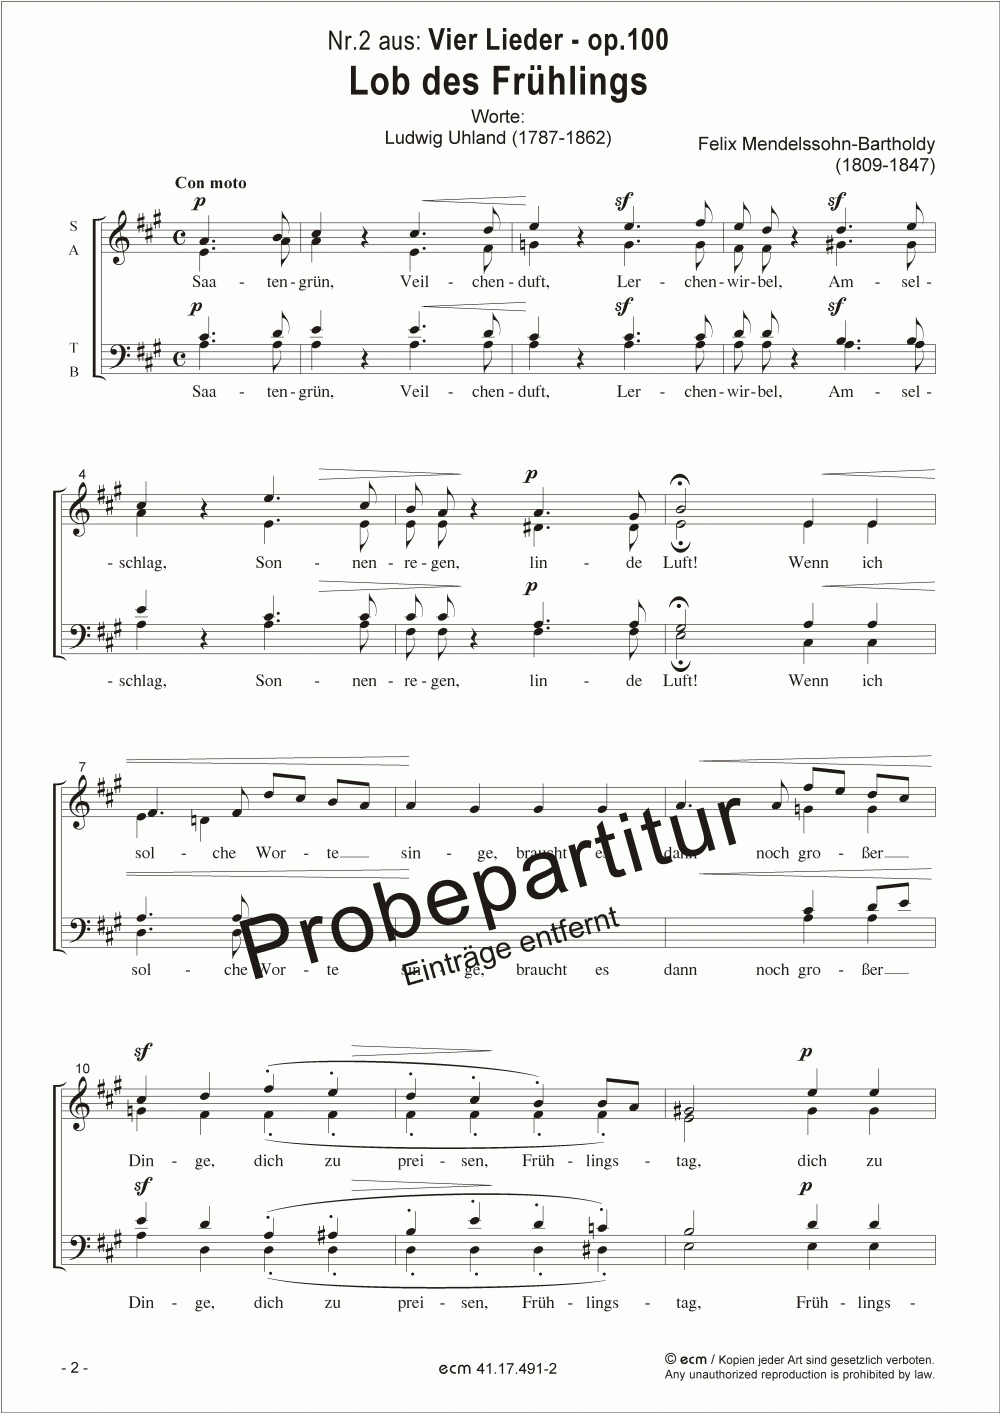 Lob des Frühlings (op.100, No.2)